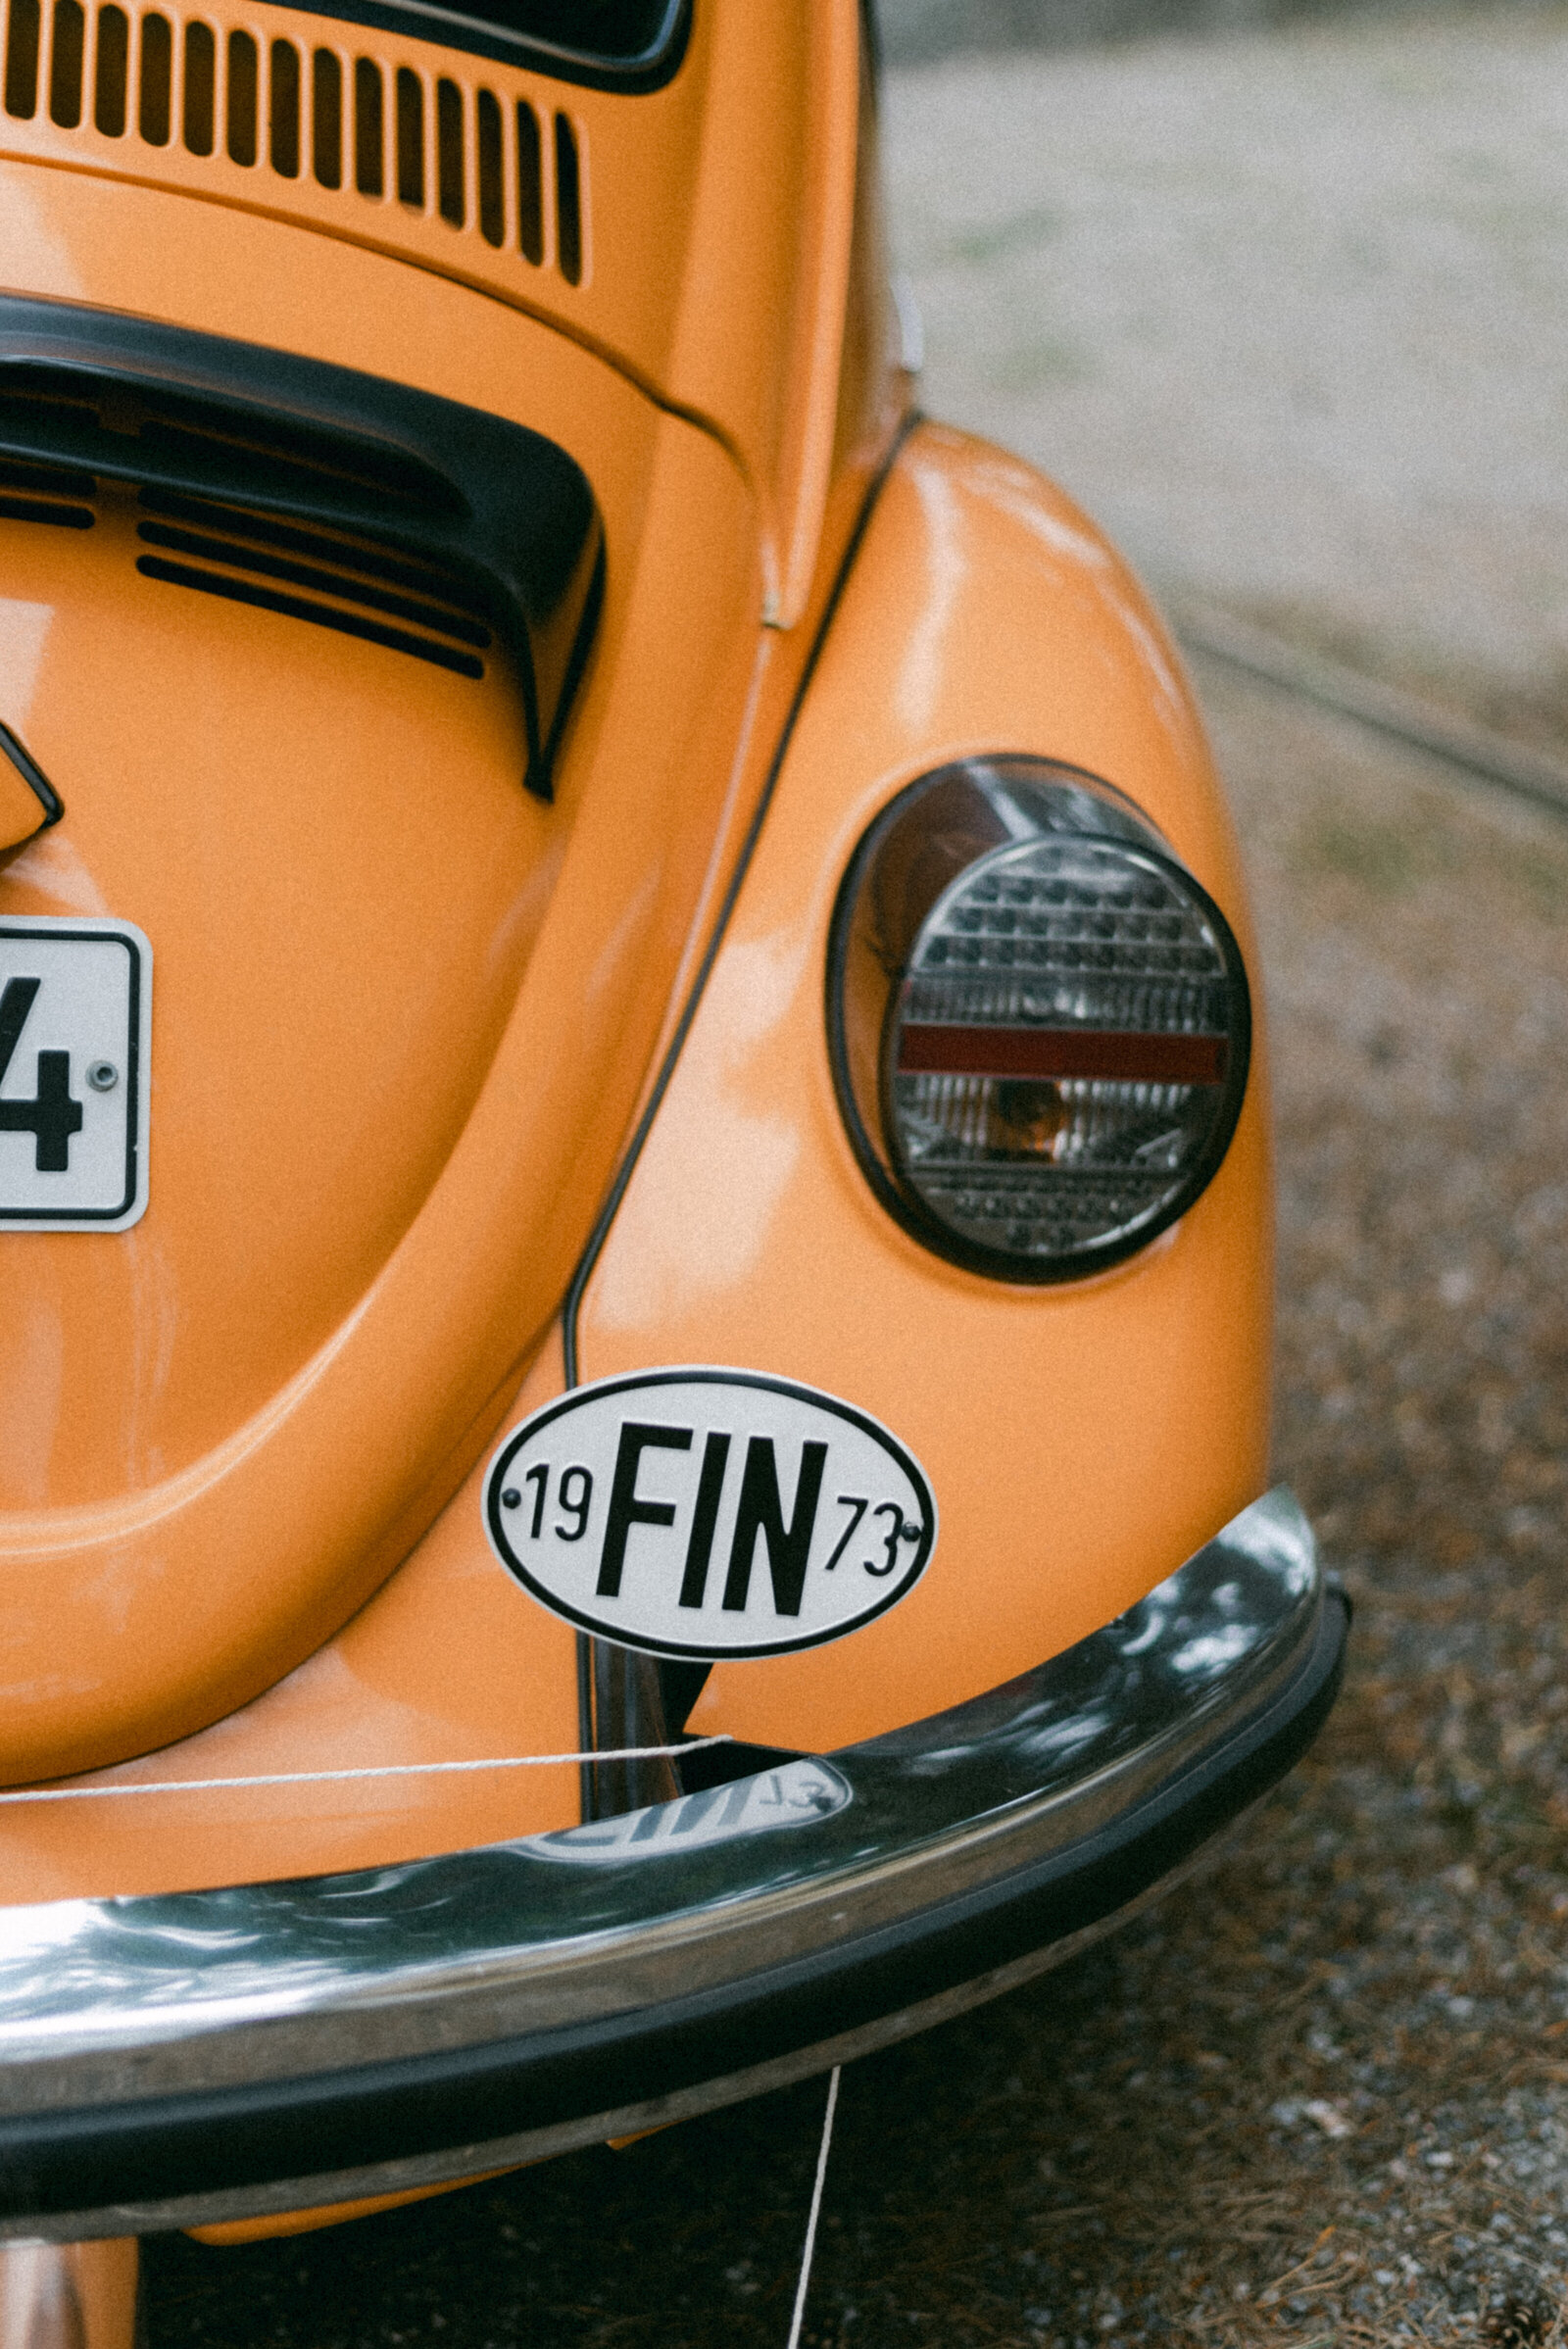 Orange volkswagen beetle as a wedding car. Documentary wedding photograph captured by photographer Hannika Gabrielsson.